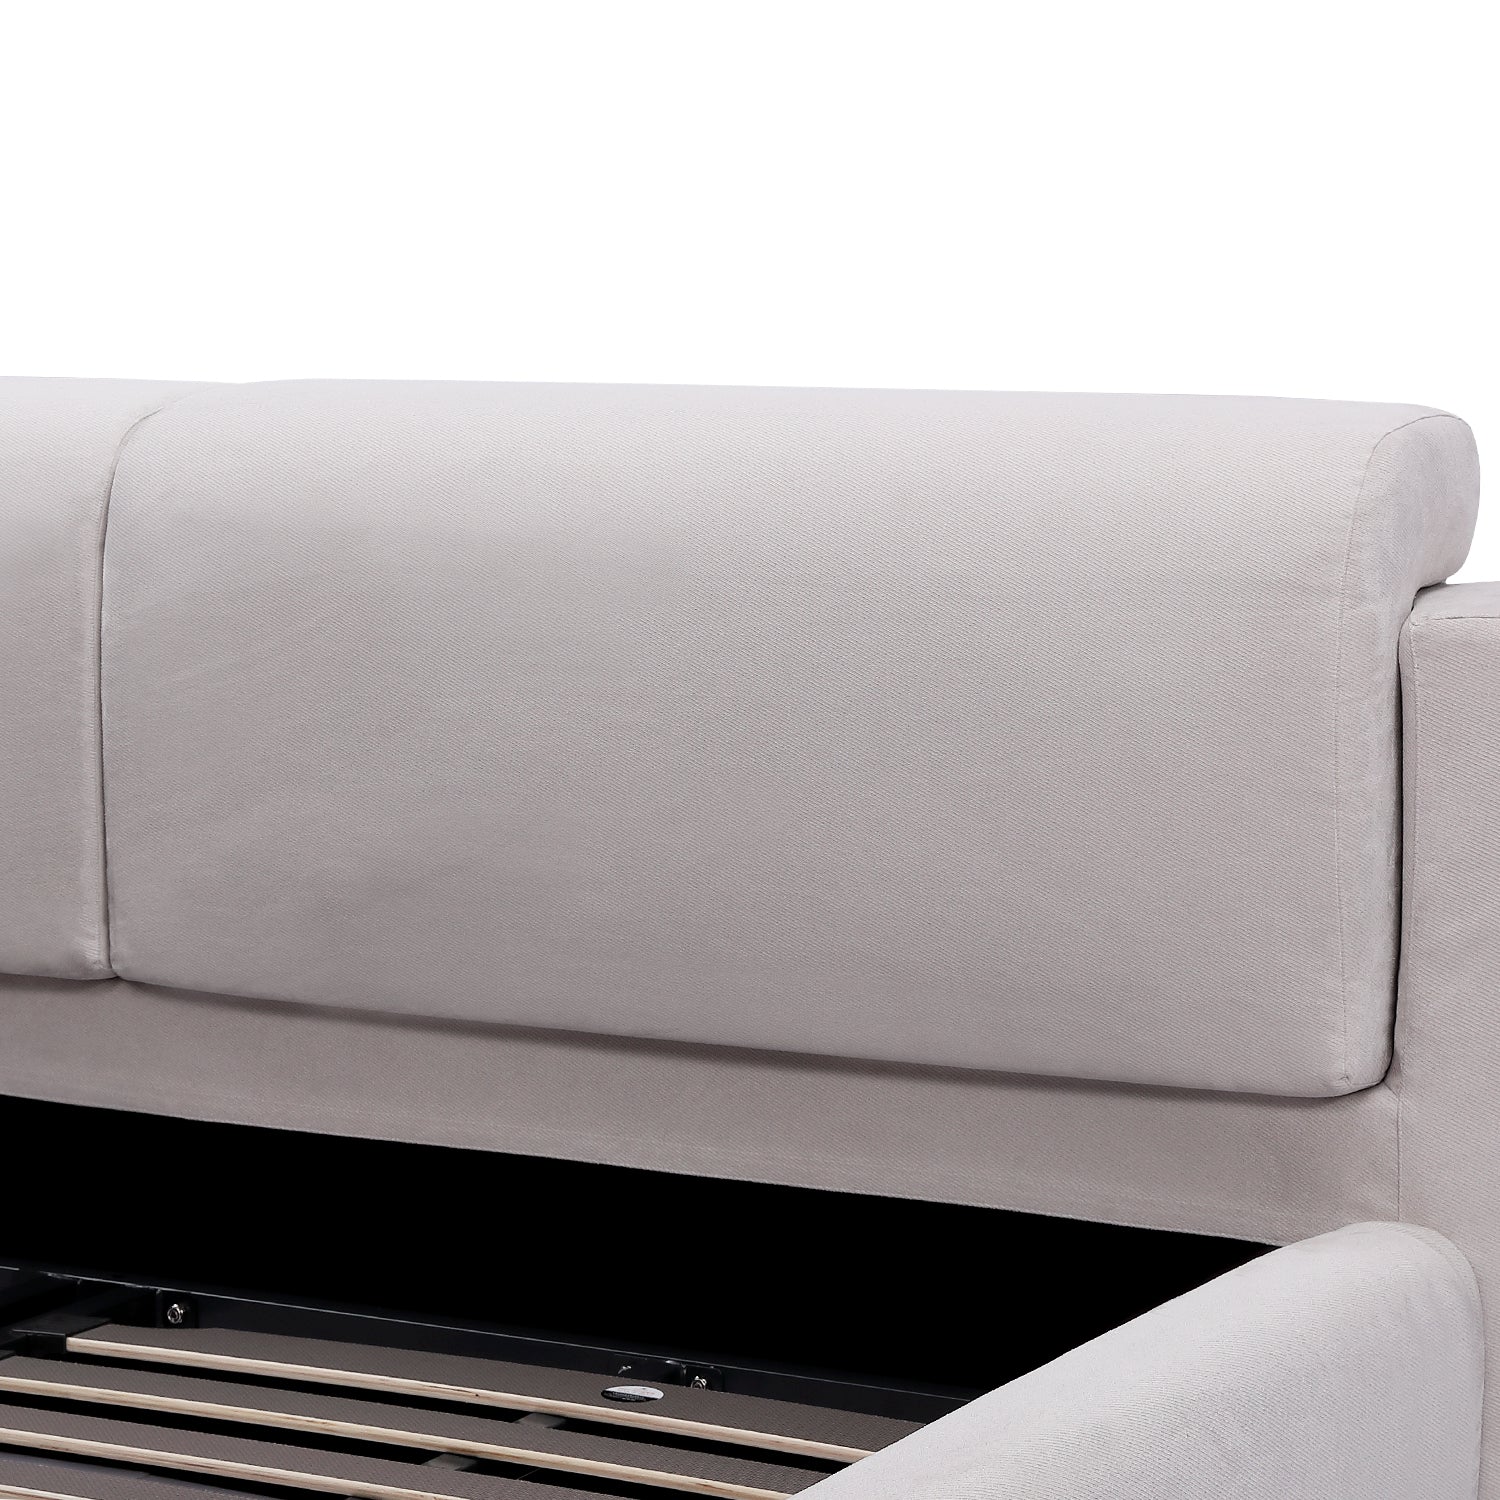 Light grey fabric headboard of DeRUCCI Bed Frame BZZ4 - 082 with minimalist and sleek design